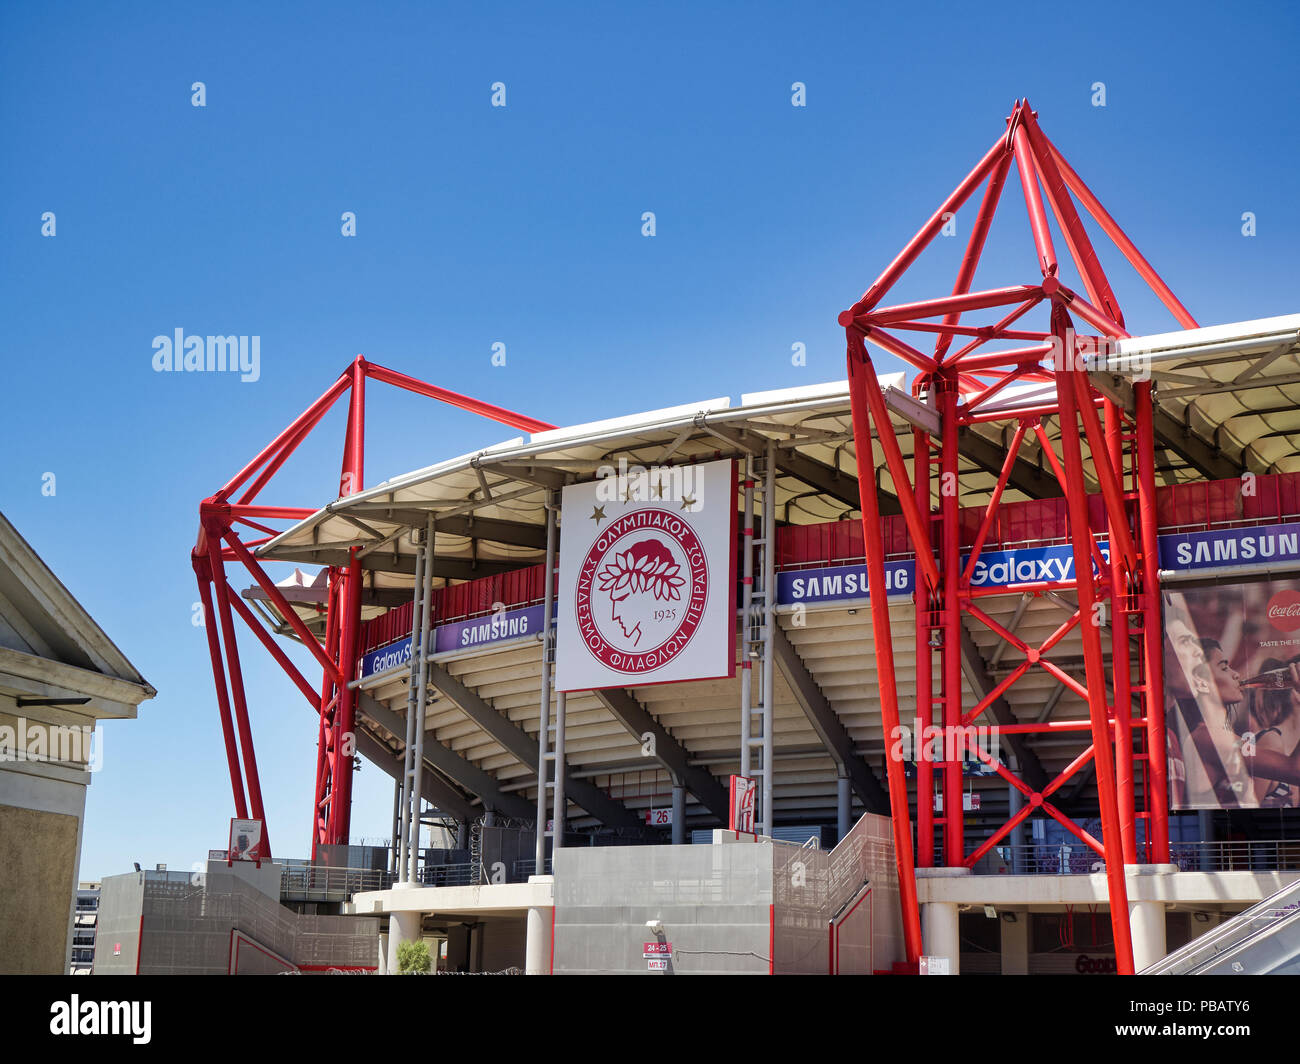 Athens, Greece - June 29, 2018. The Georgios Karaiskakis Stadium, home of the Olympiacos Football Club team in the Neo Falir, Piraeus, Athens. Stock Photo